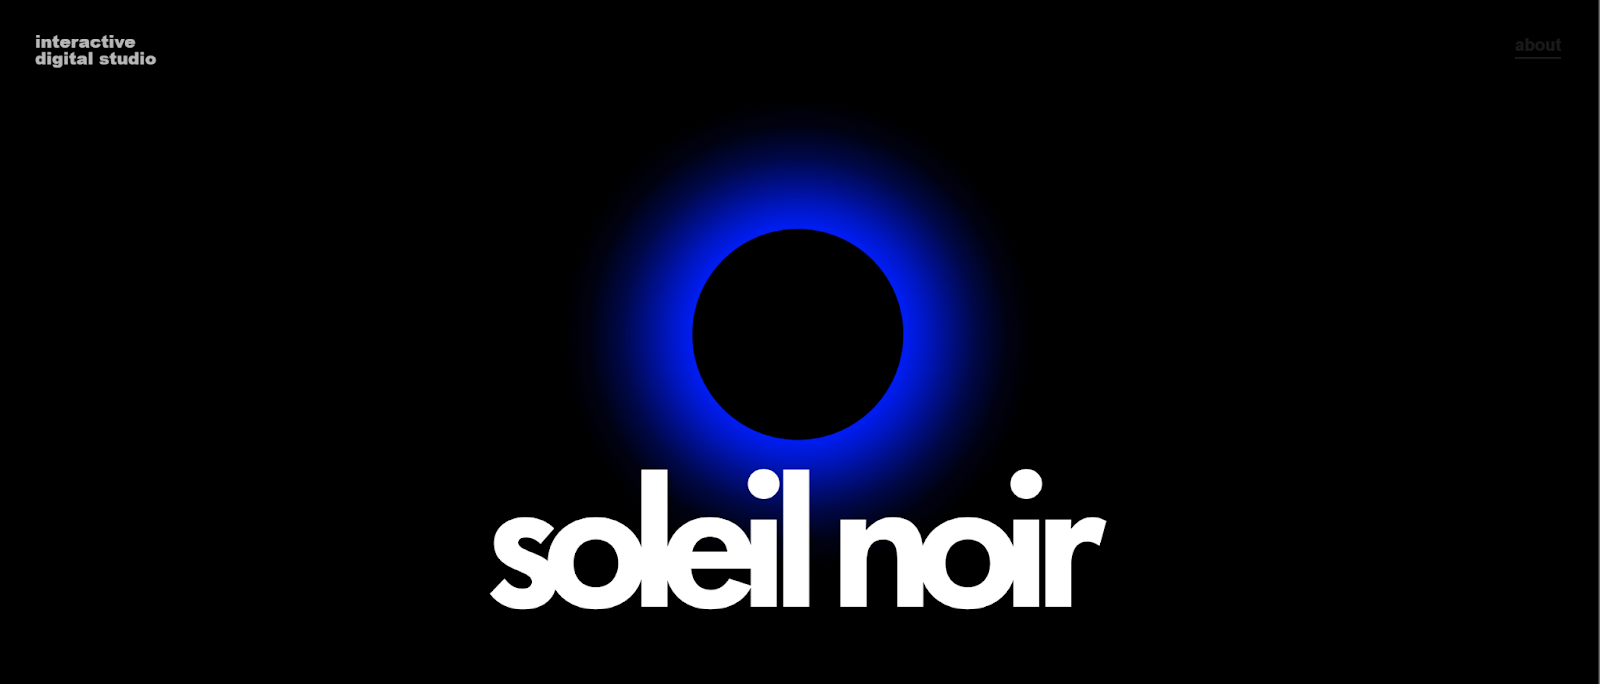 parallax scrolling website examples, Soleil Noir